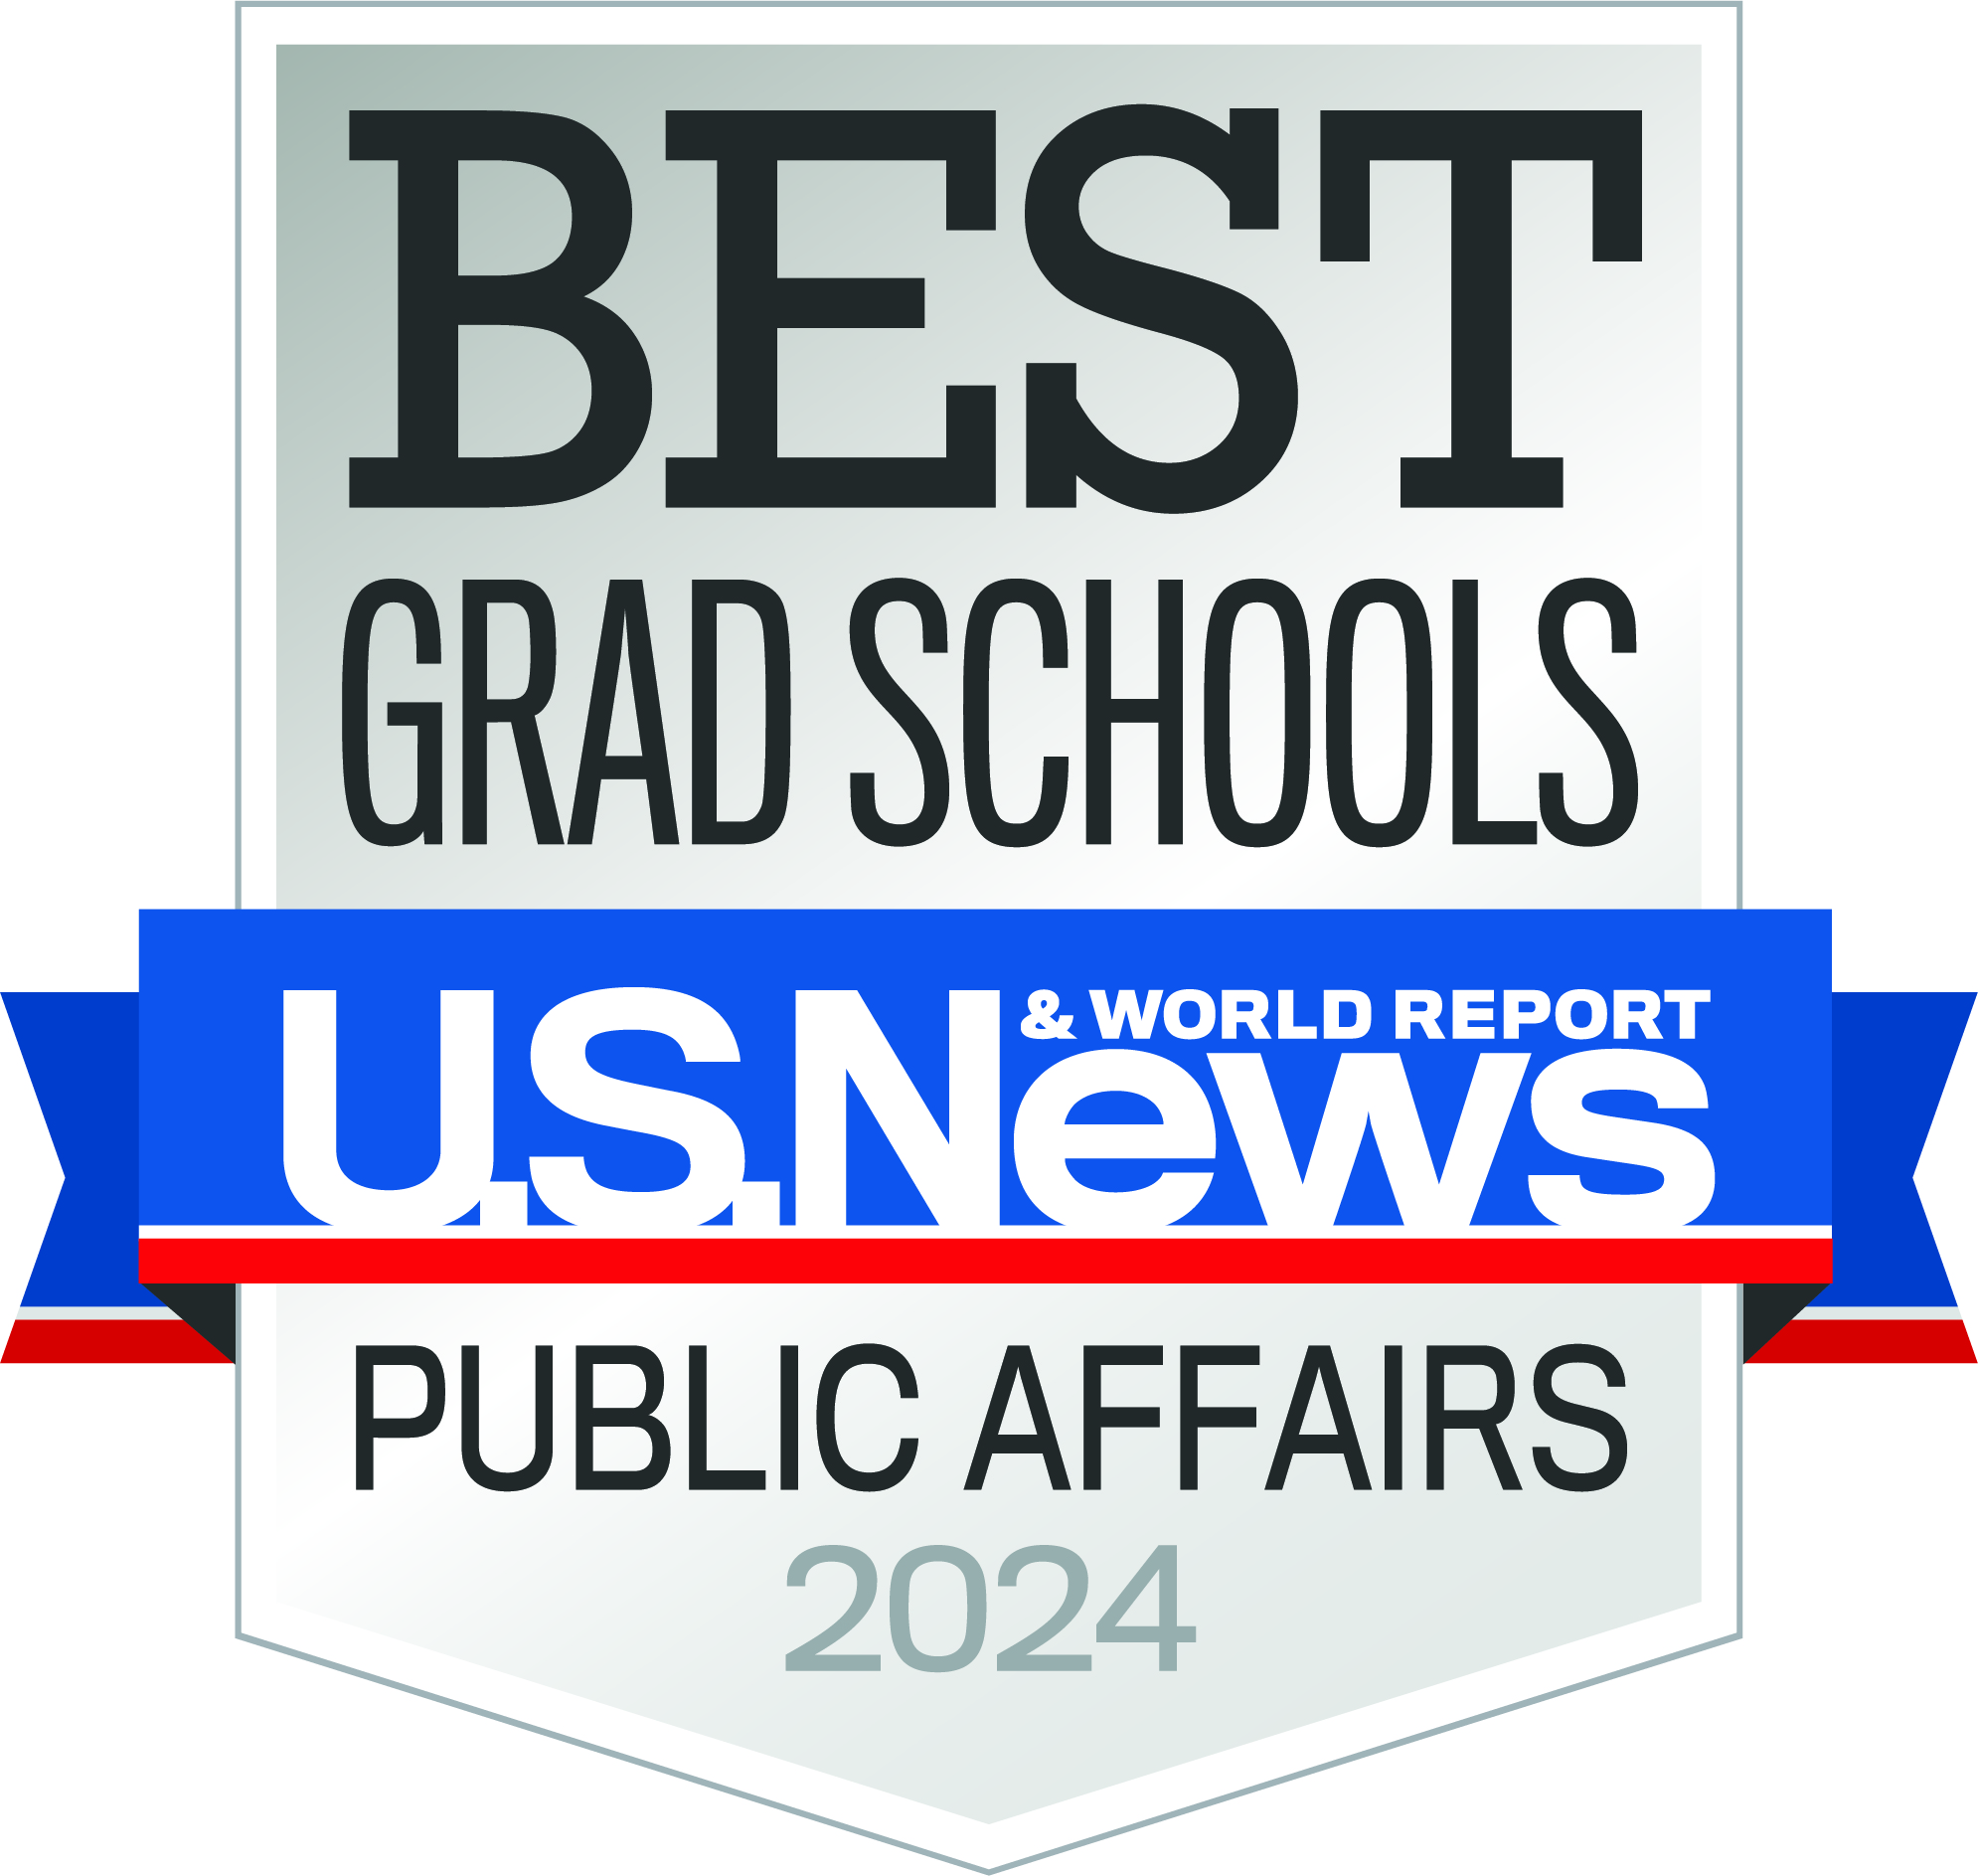 Best Grad Schools Public Affairs 2024 badge by U.S. News